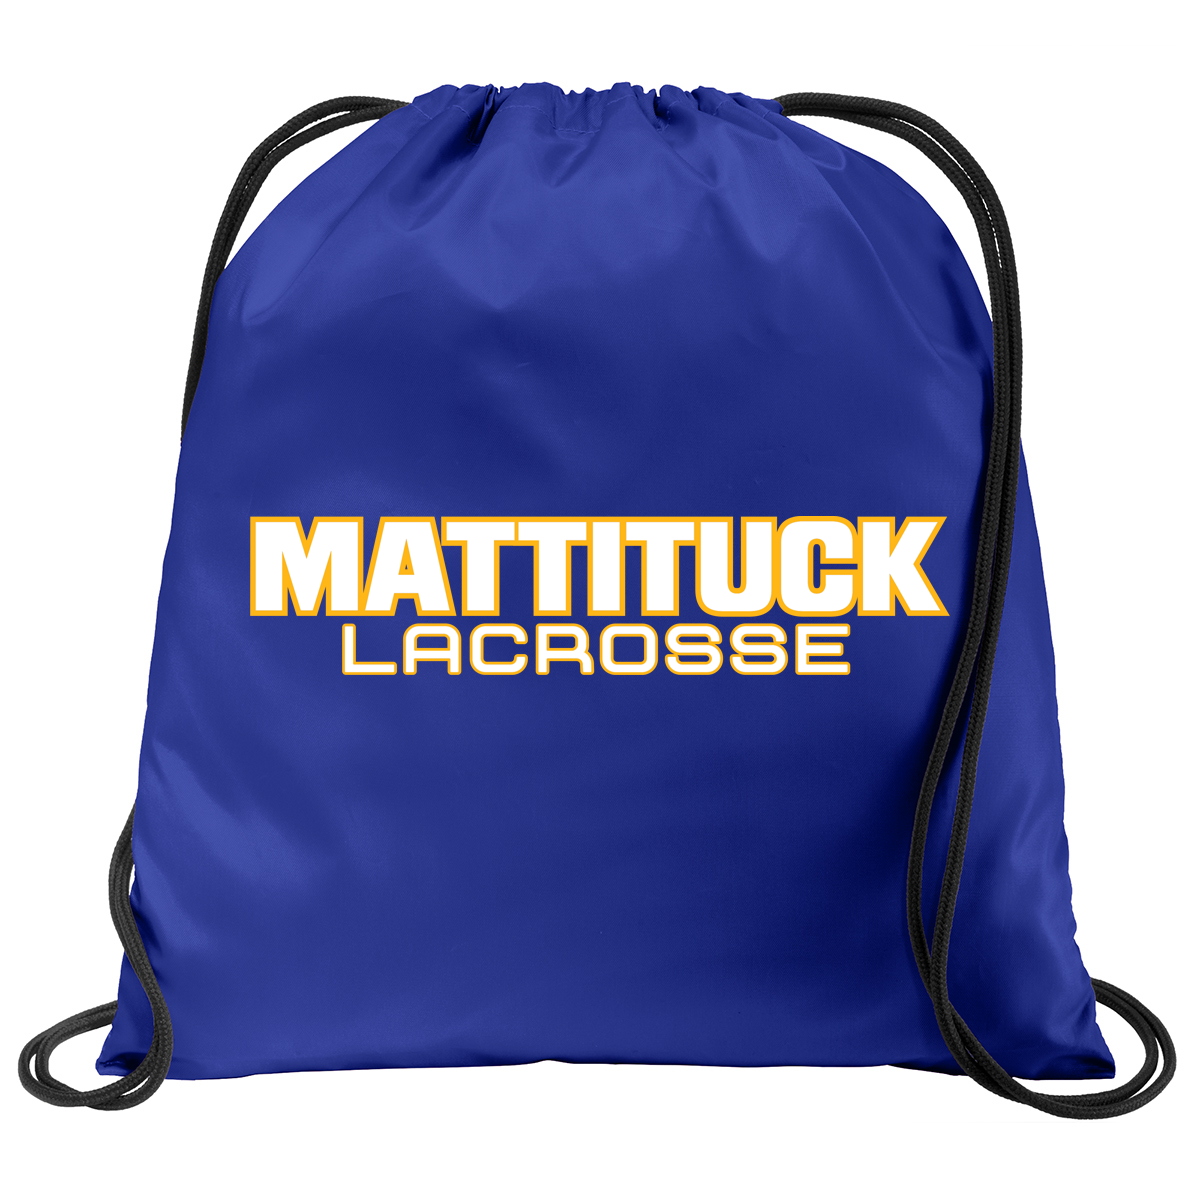 Mattituck Lacrosse Cinch Pack